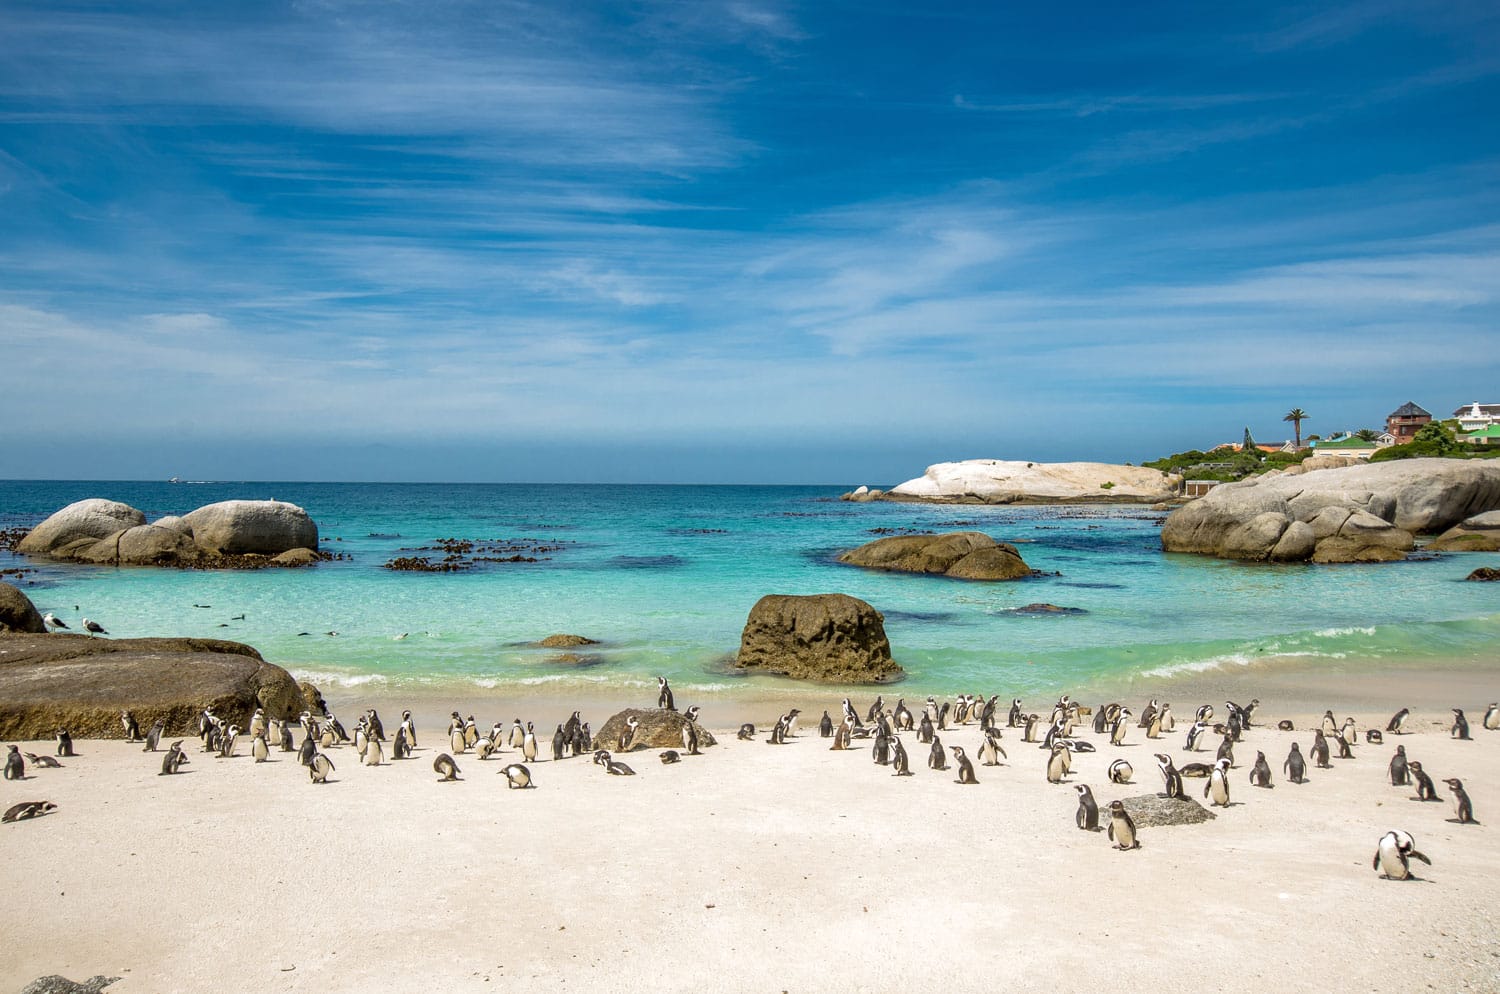 The Penguins at Boulders Beach, Cape Town